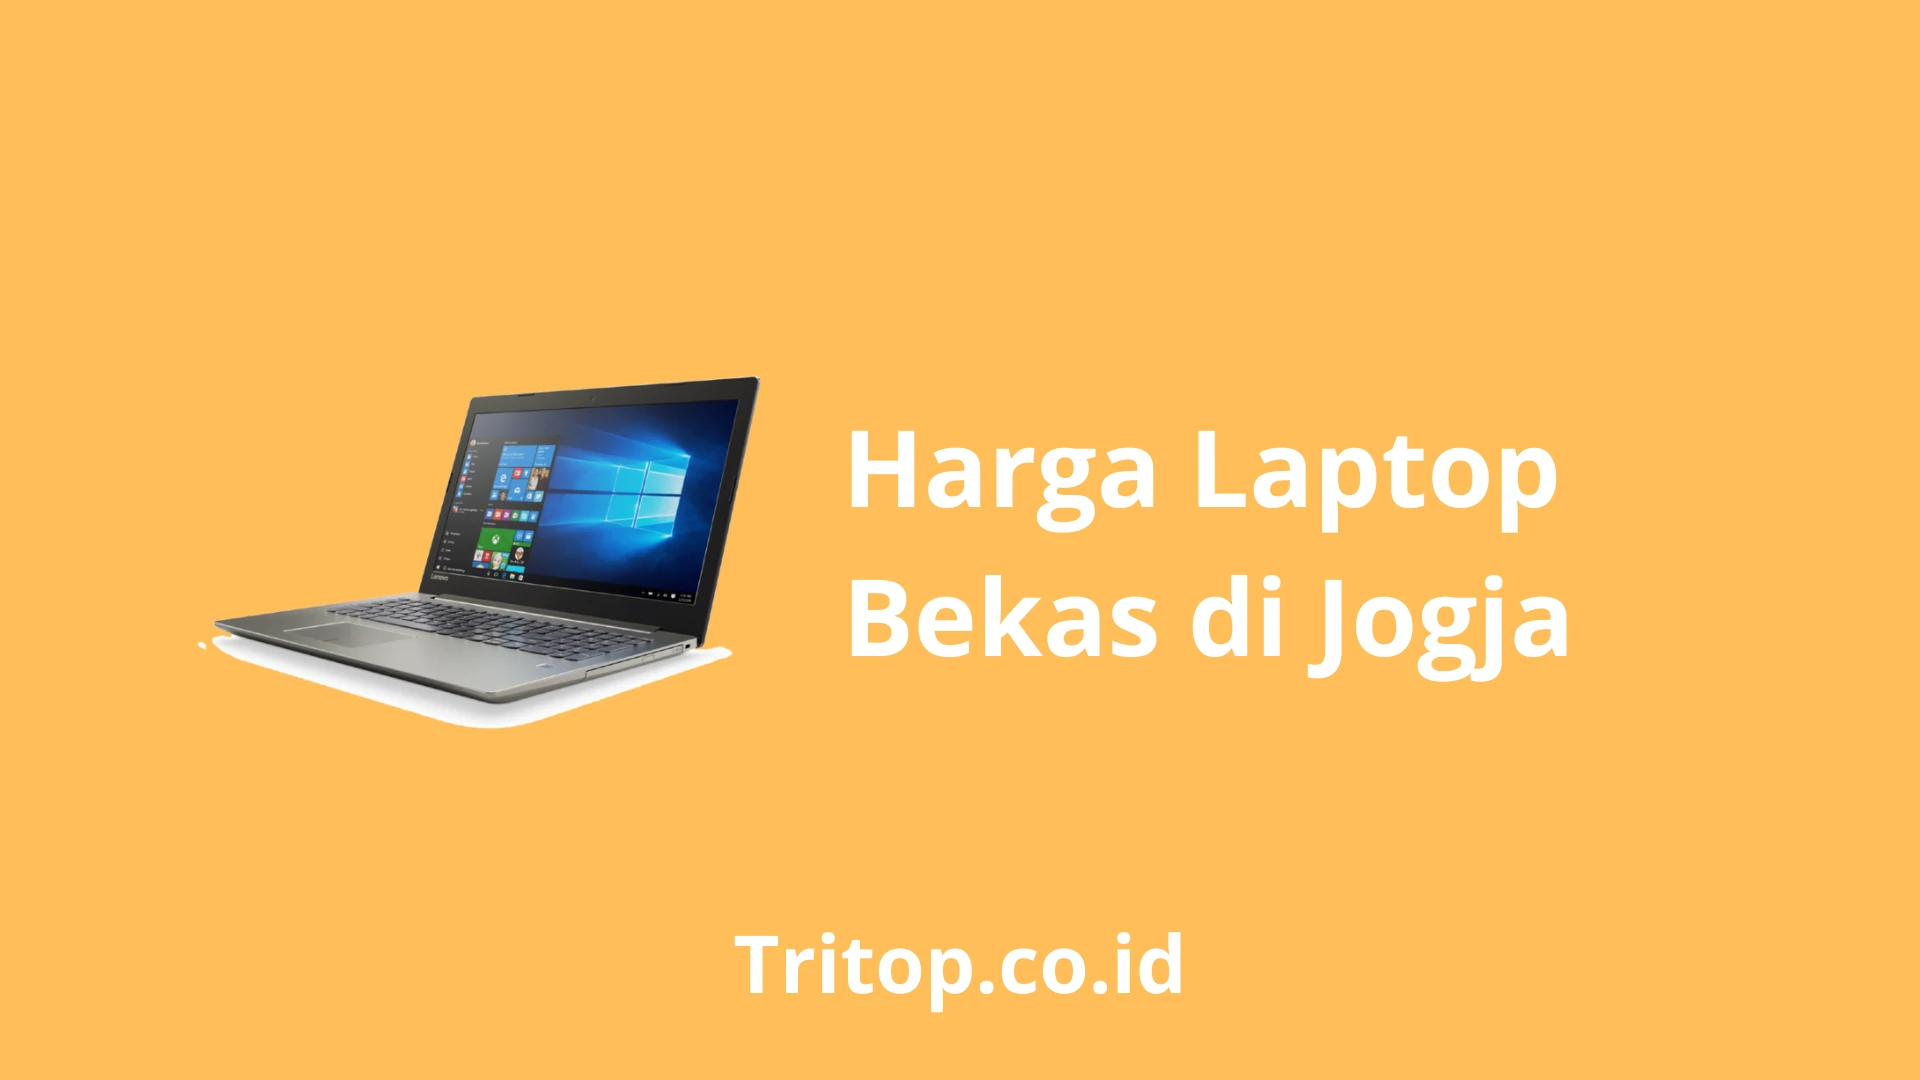 Harga Laptop Bekas Jogja Tritop.co.id